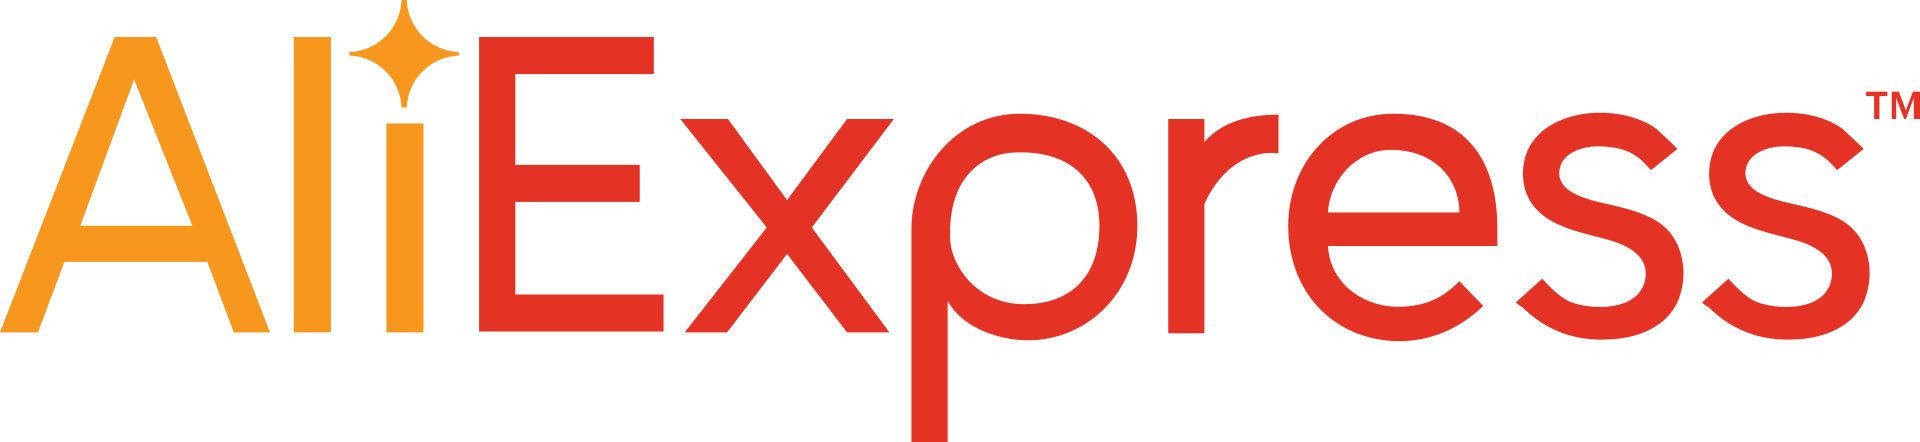 Логотип Aliexpress